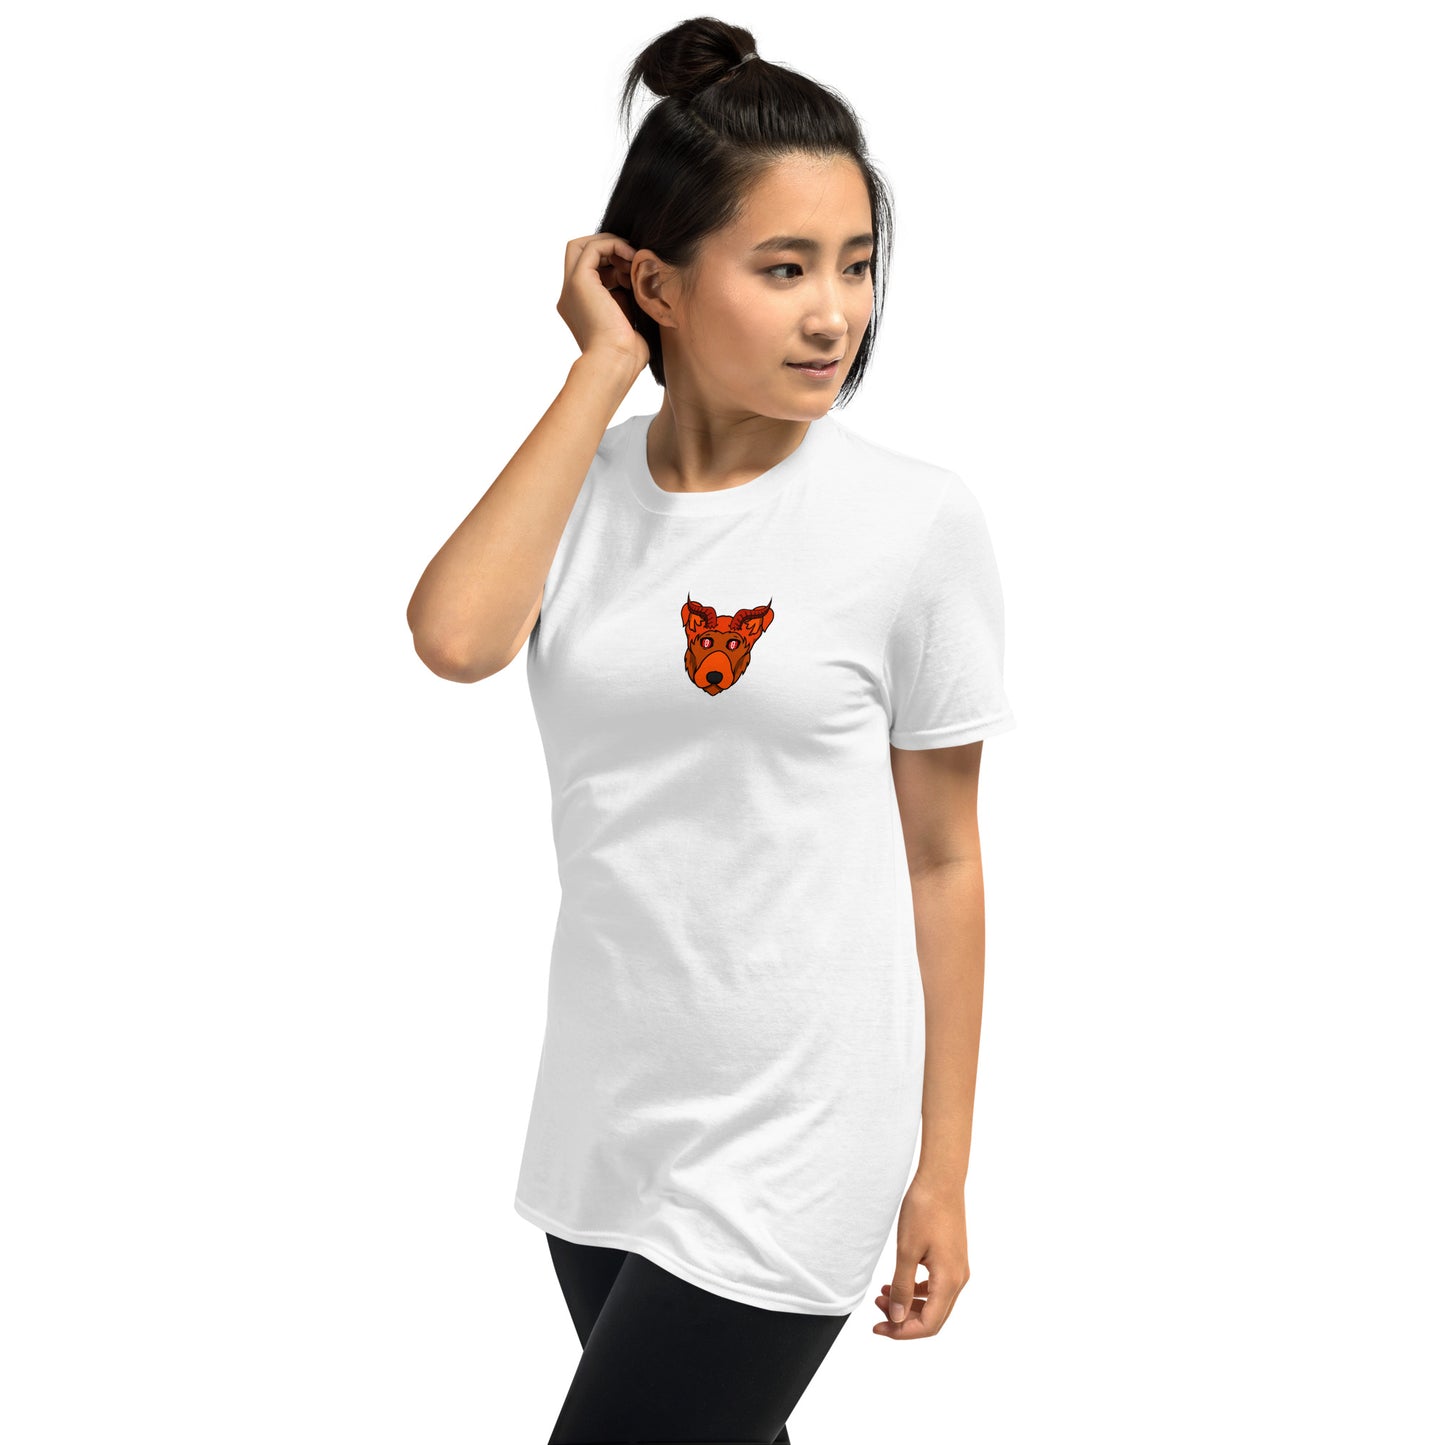 CBRD Gen 2: Short-Sleeve Unisex T-Shirt